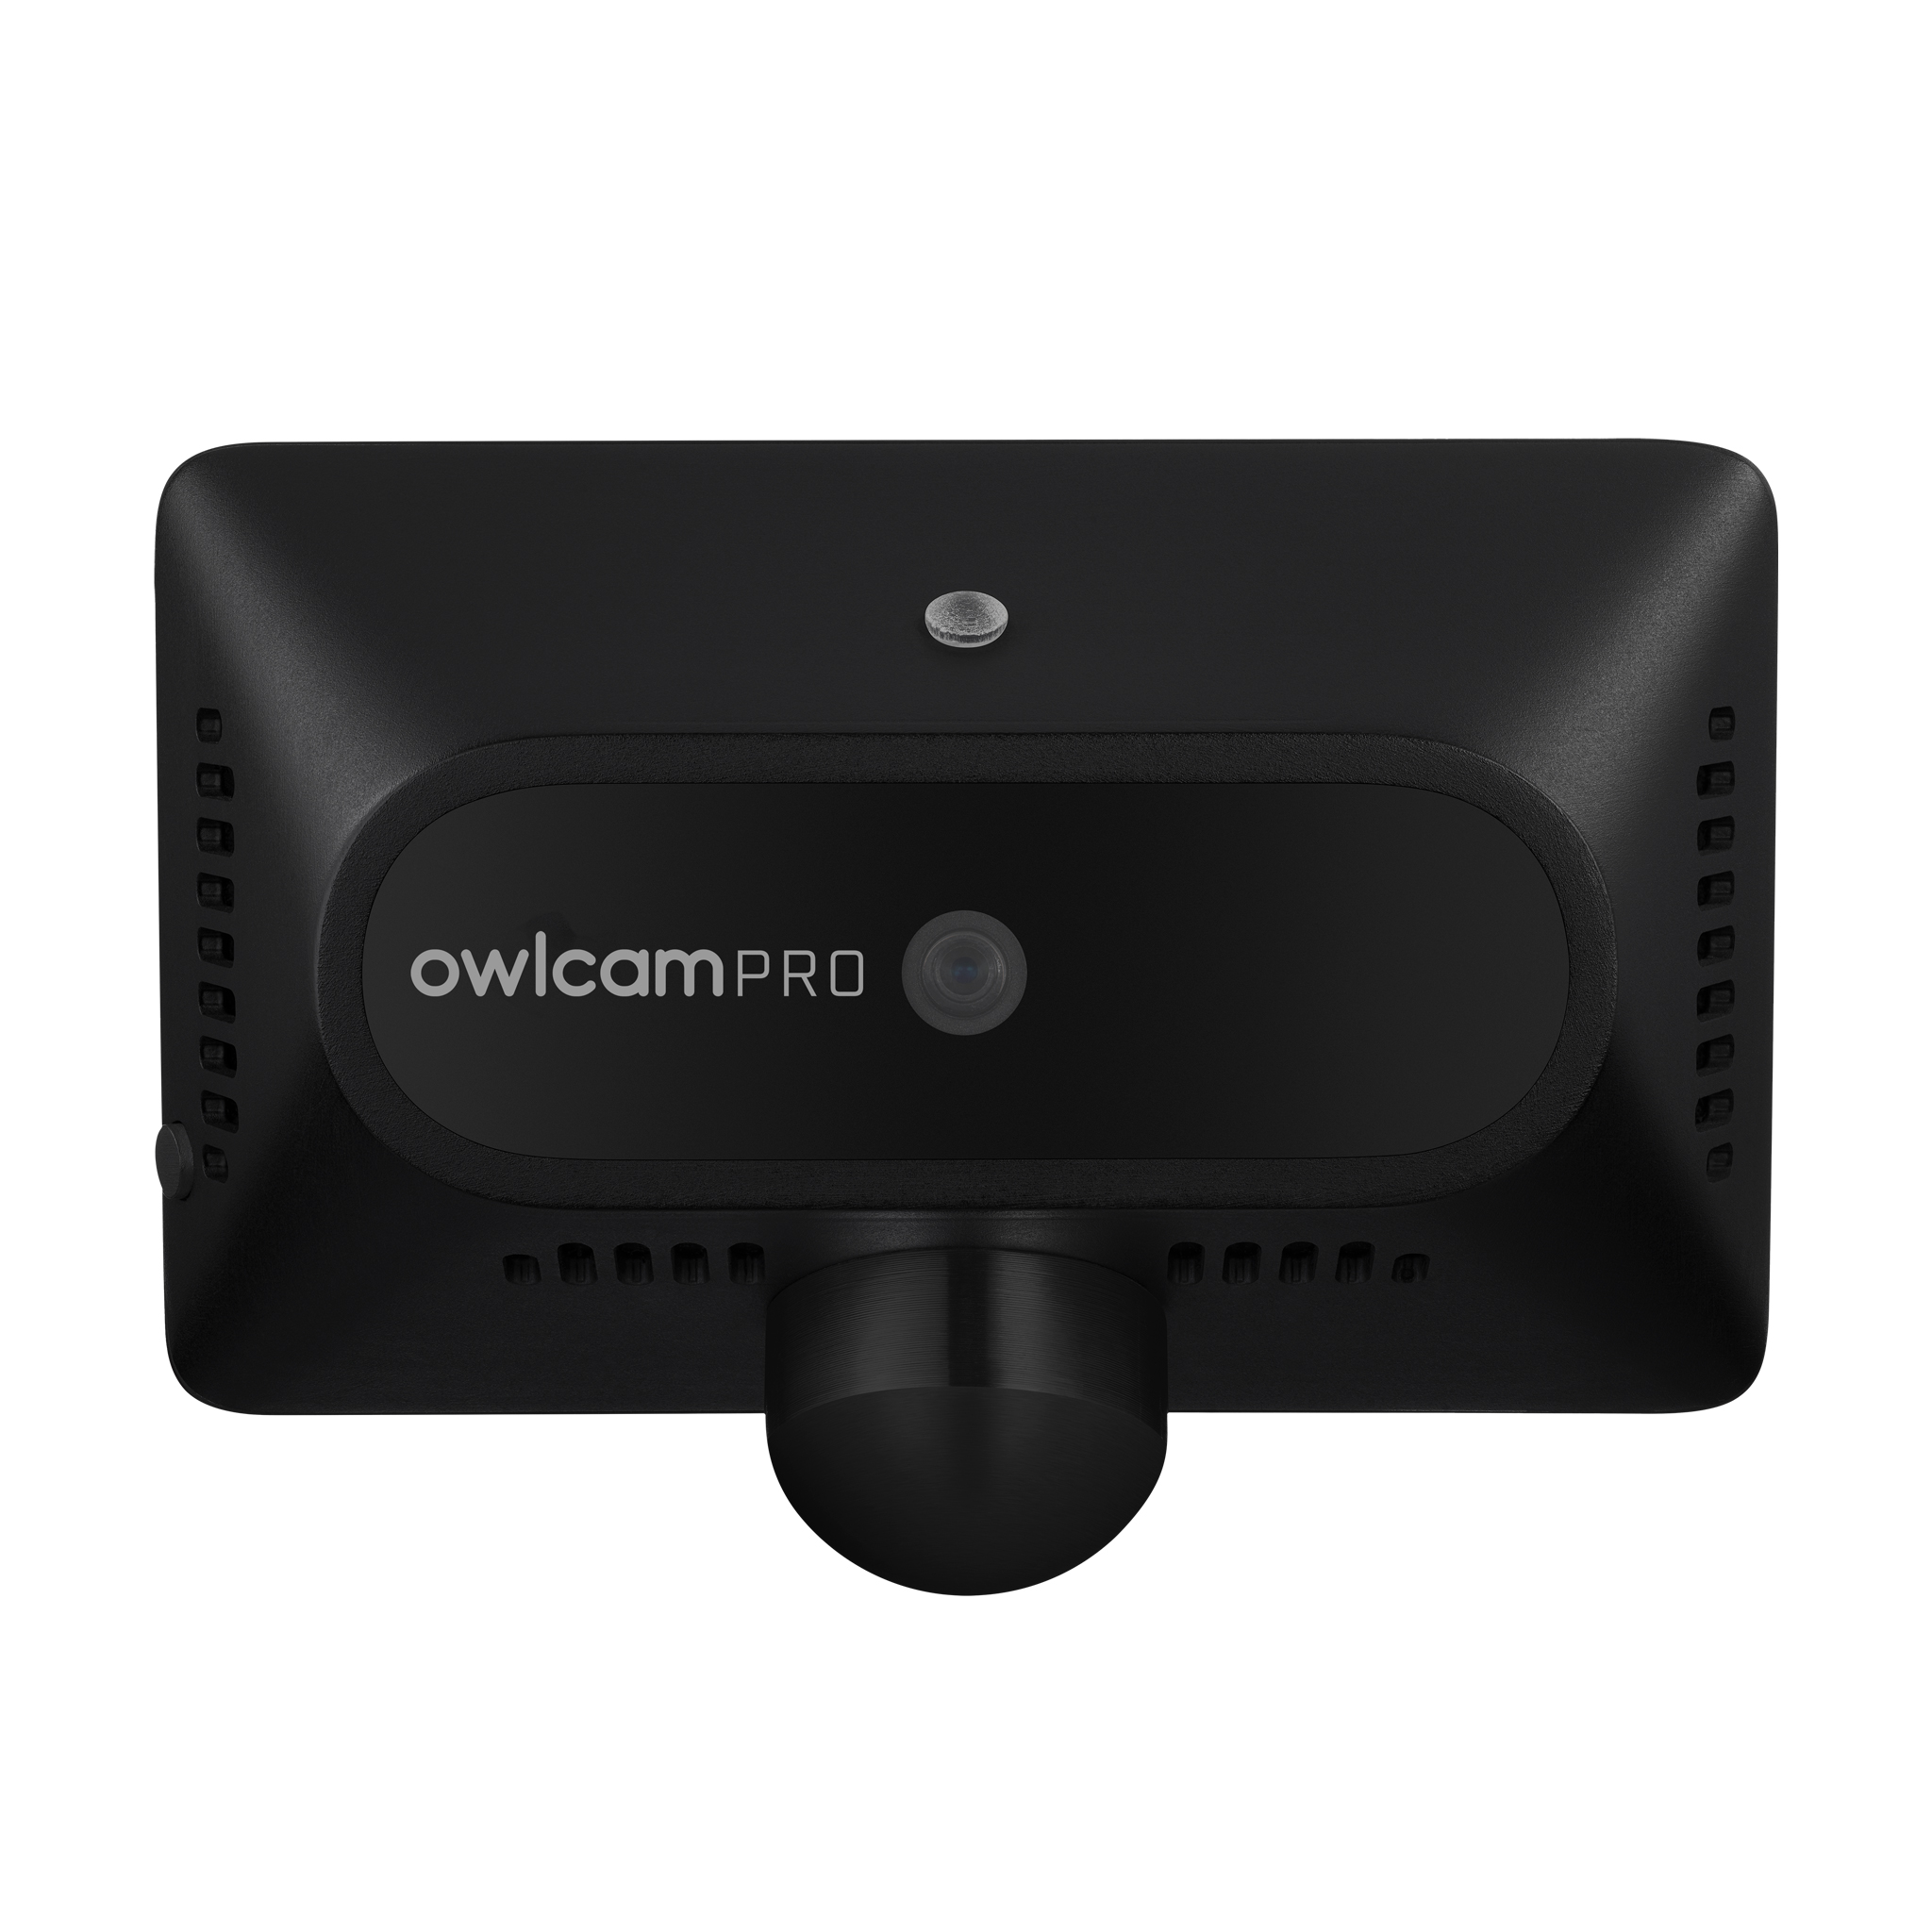 Owlcam Pro front view